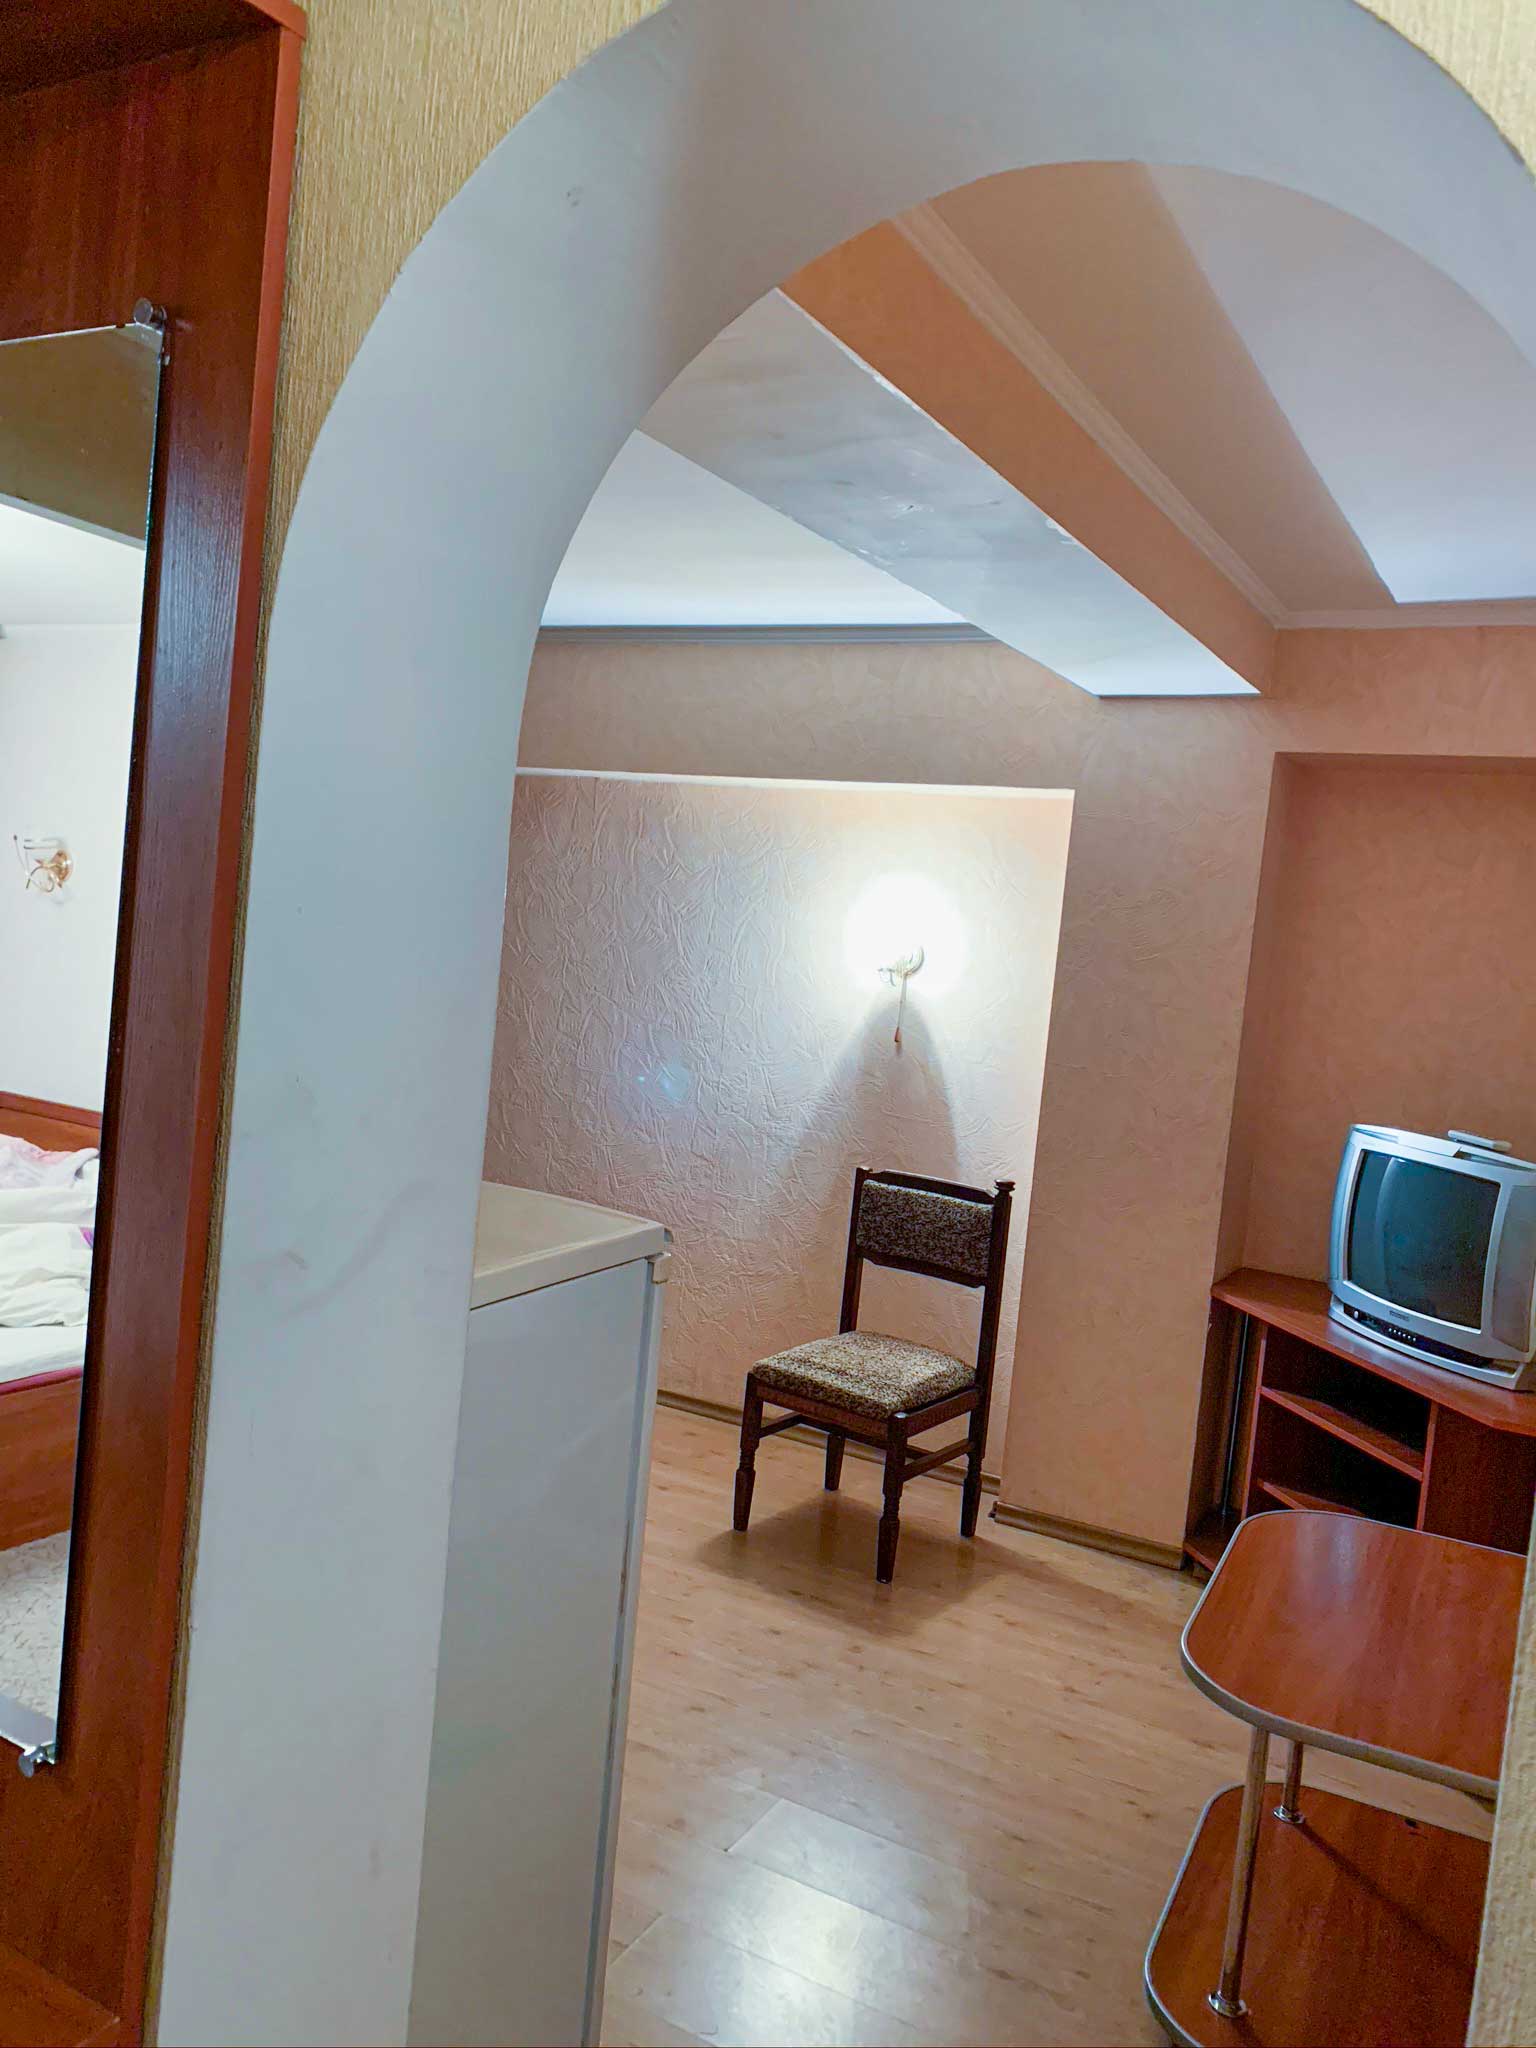 Room in Hotel Aist, Tiraspol